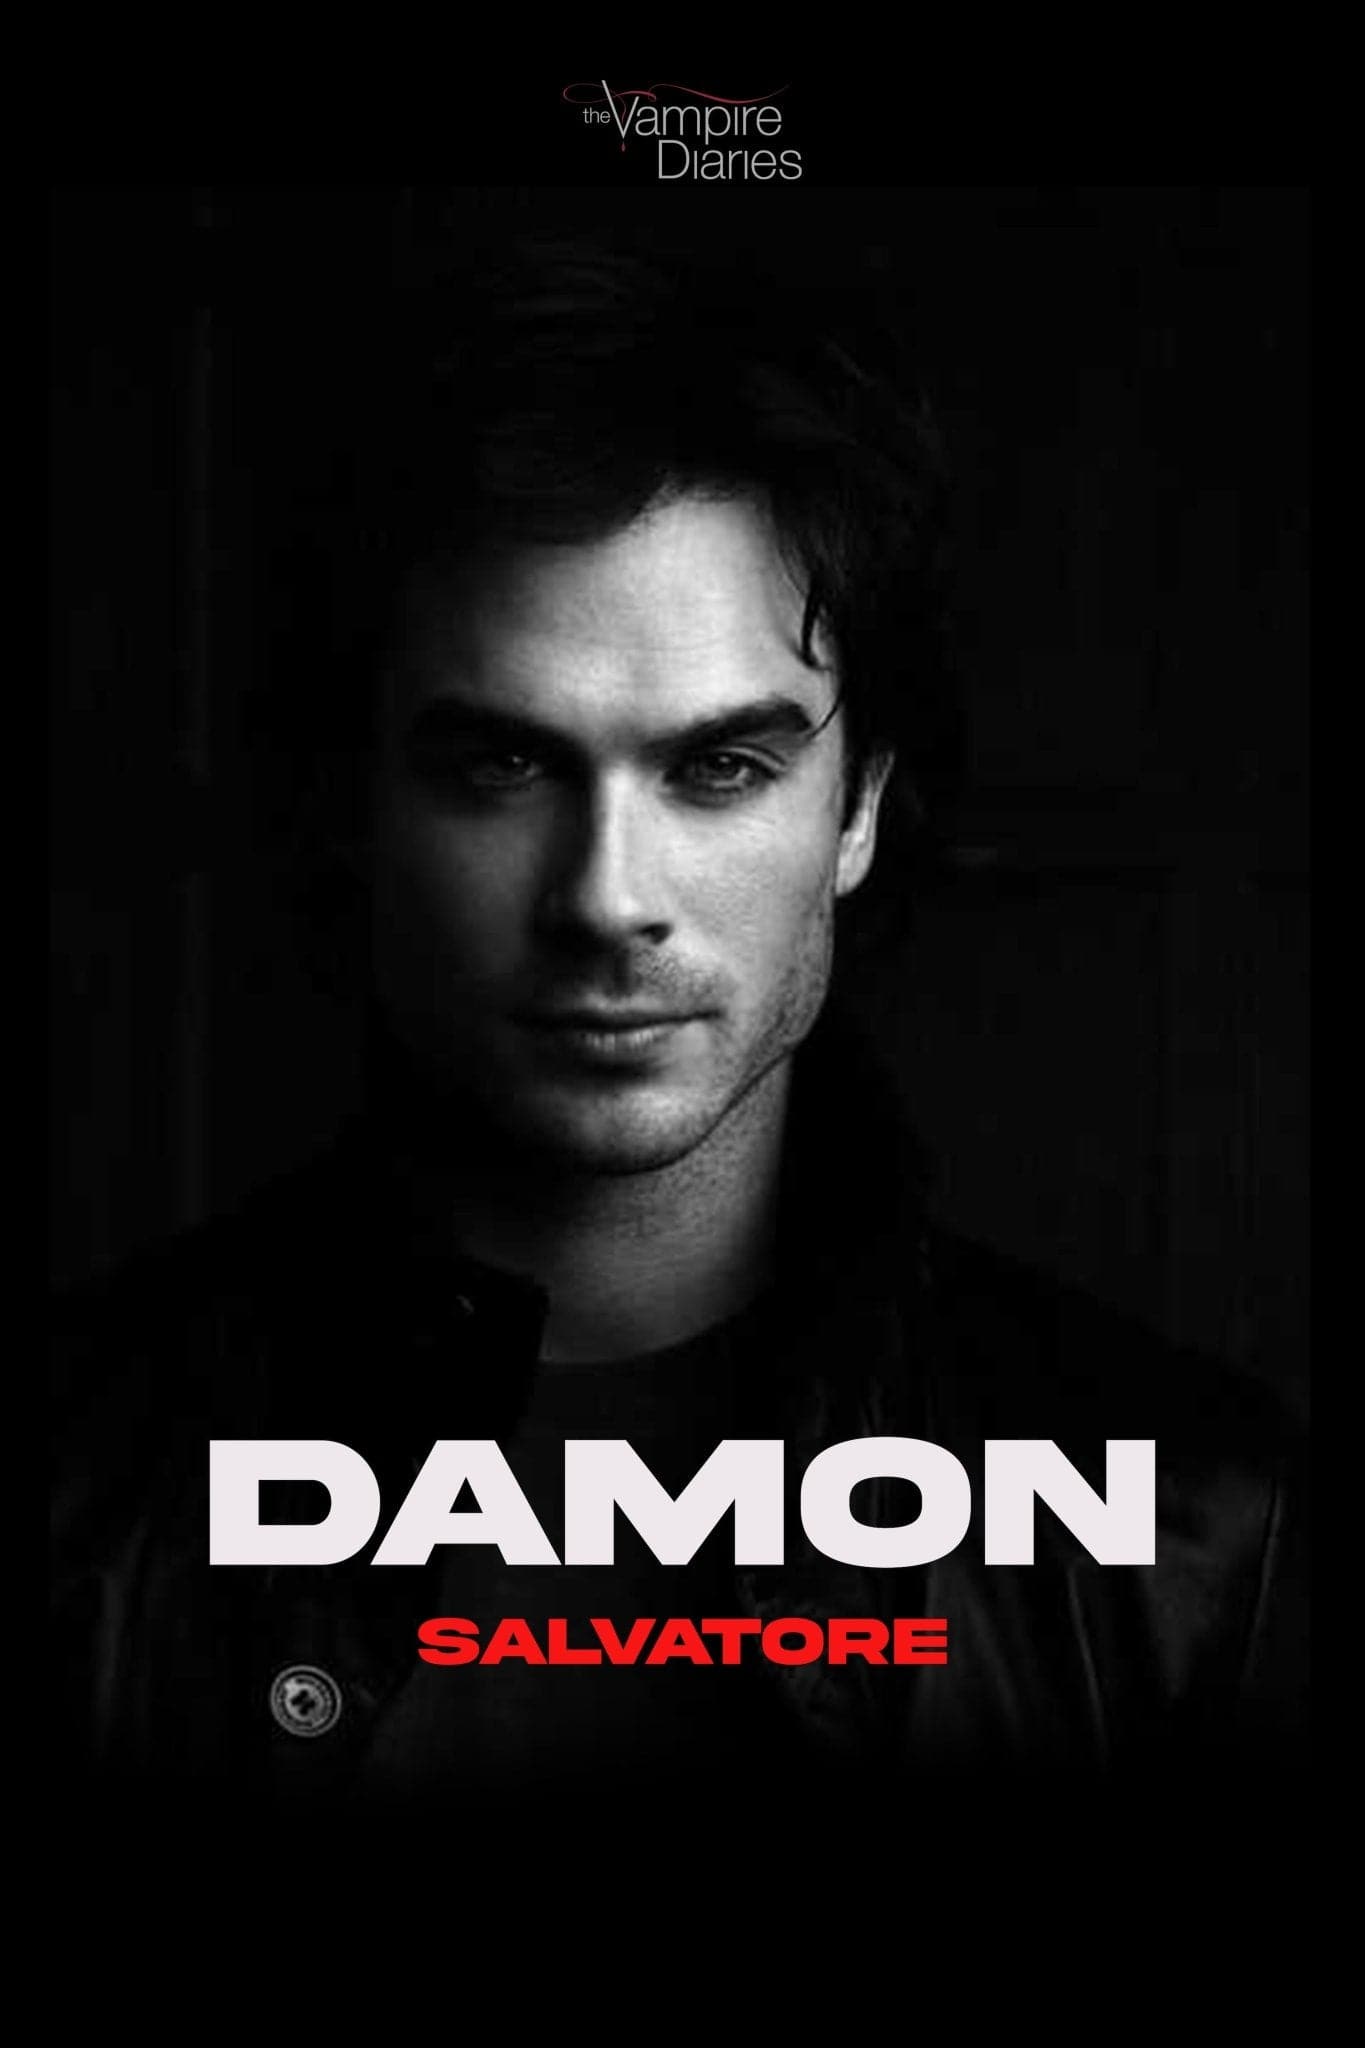 Vampire Diaries ‘Damon’ Poster - Posters Plug